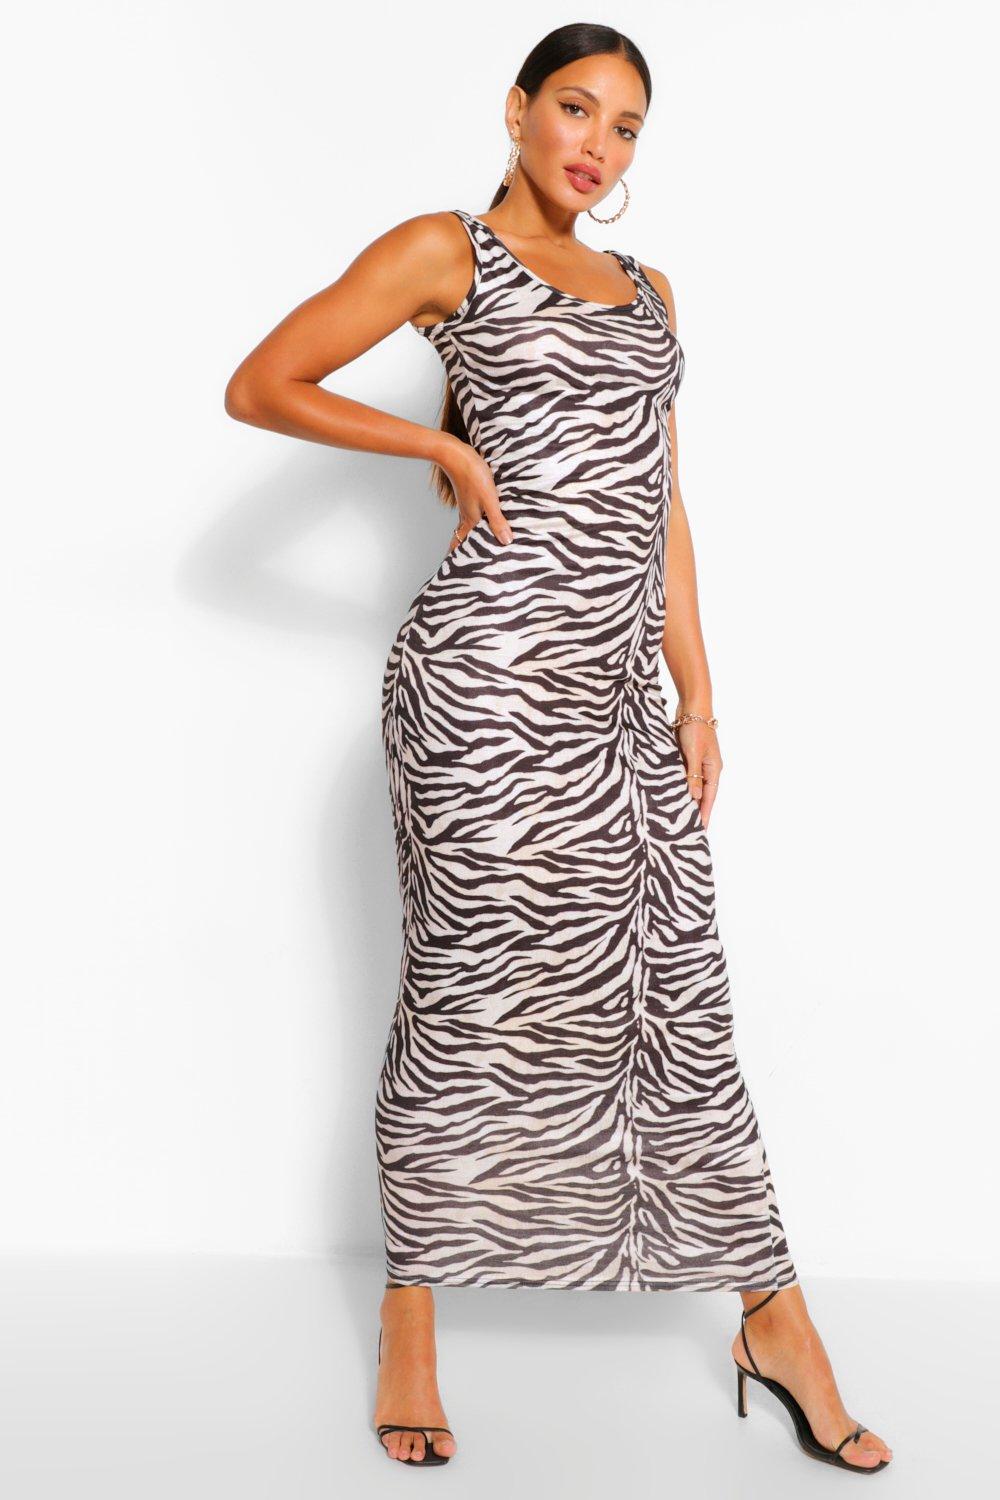 boohoo zebra print dress